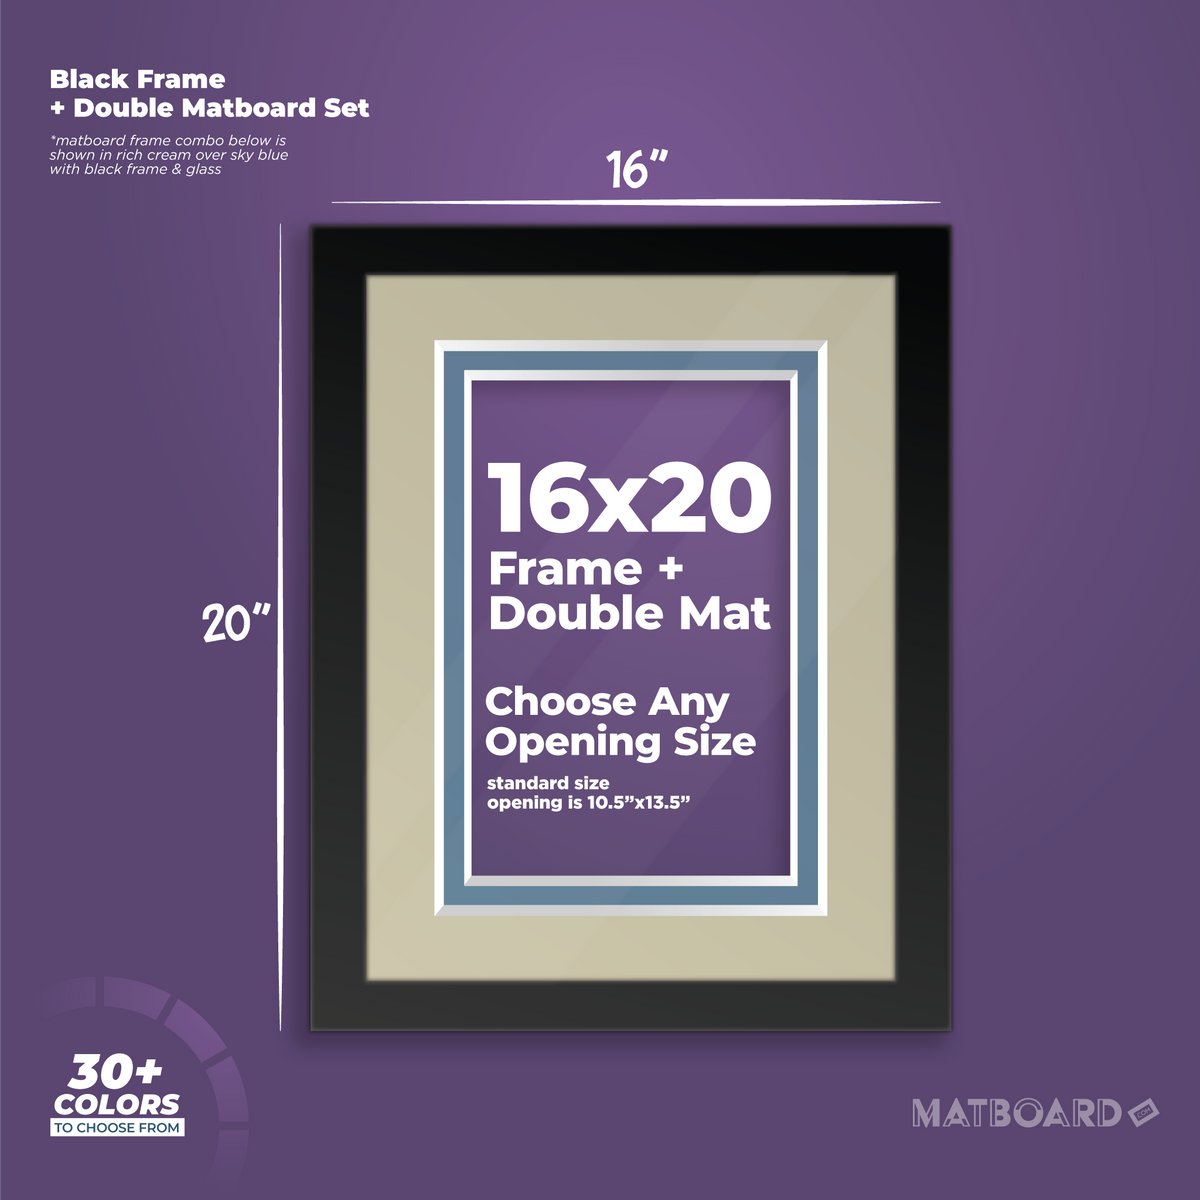 16x20 Frame + Double Mat – Matboarddotcom